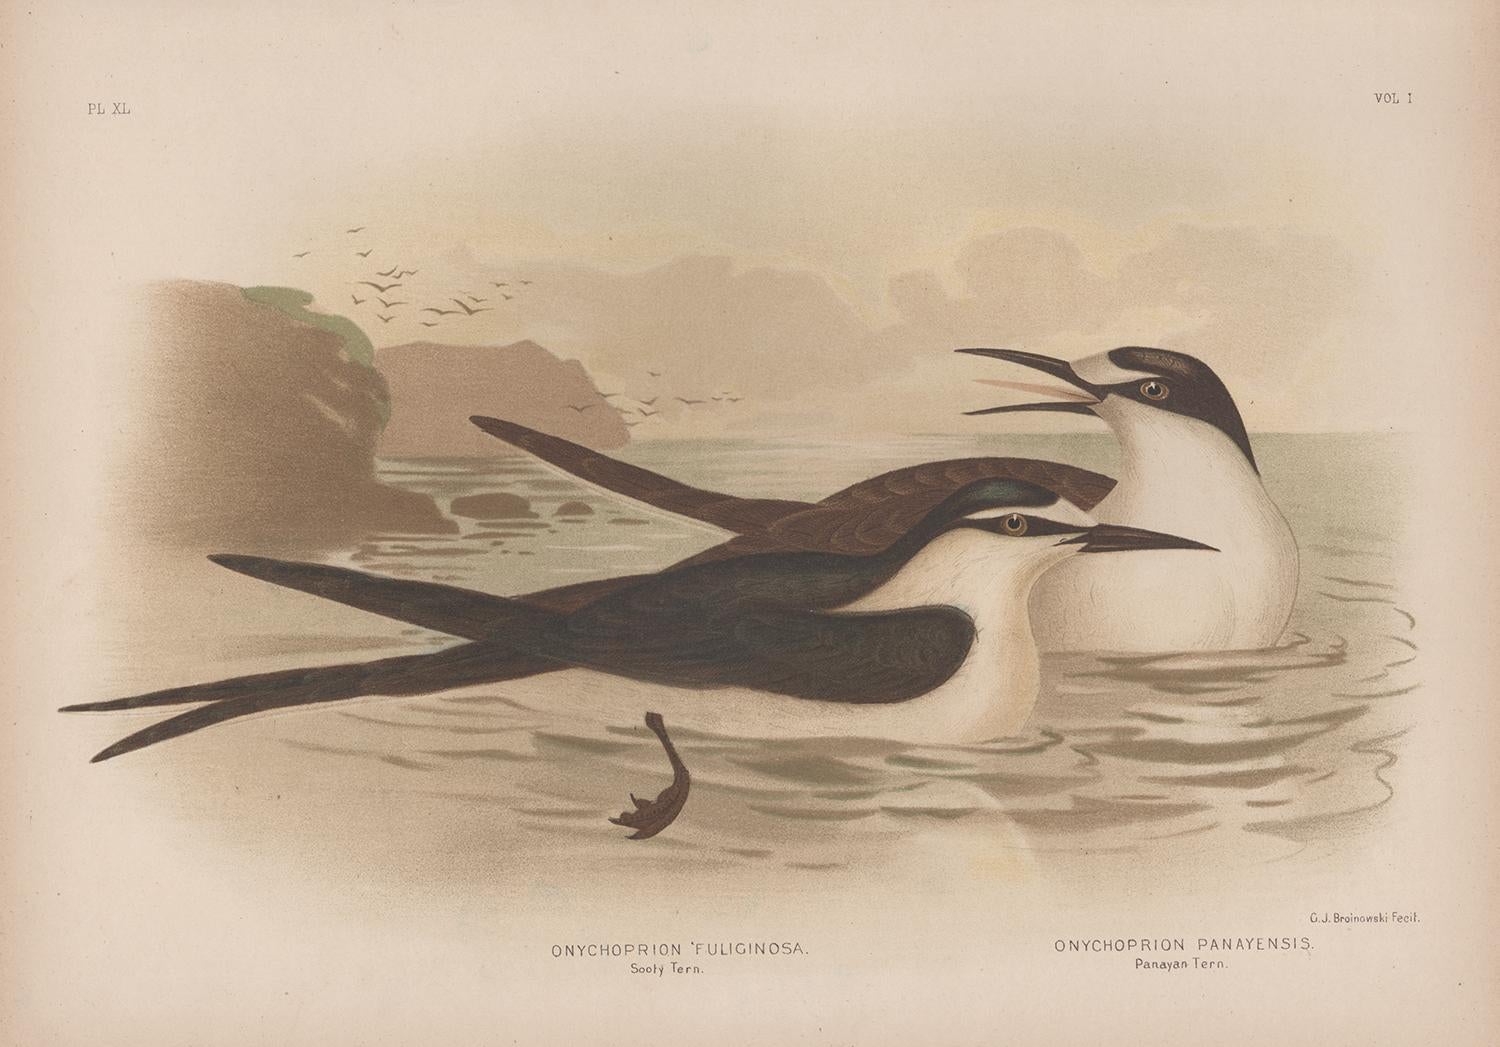 Sooty Tern und Panayan Tern, antiker Seevogel-Chromolithografiedruck, 1889